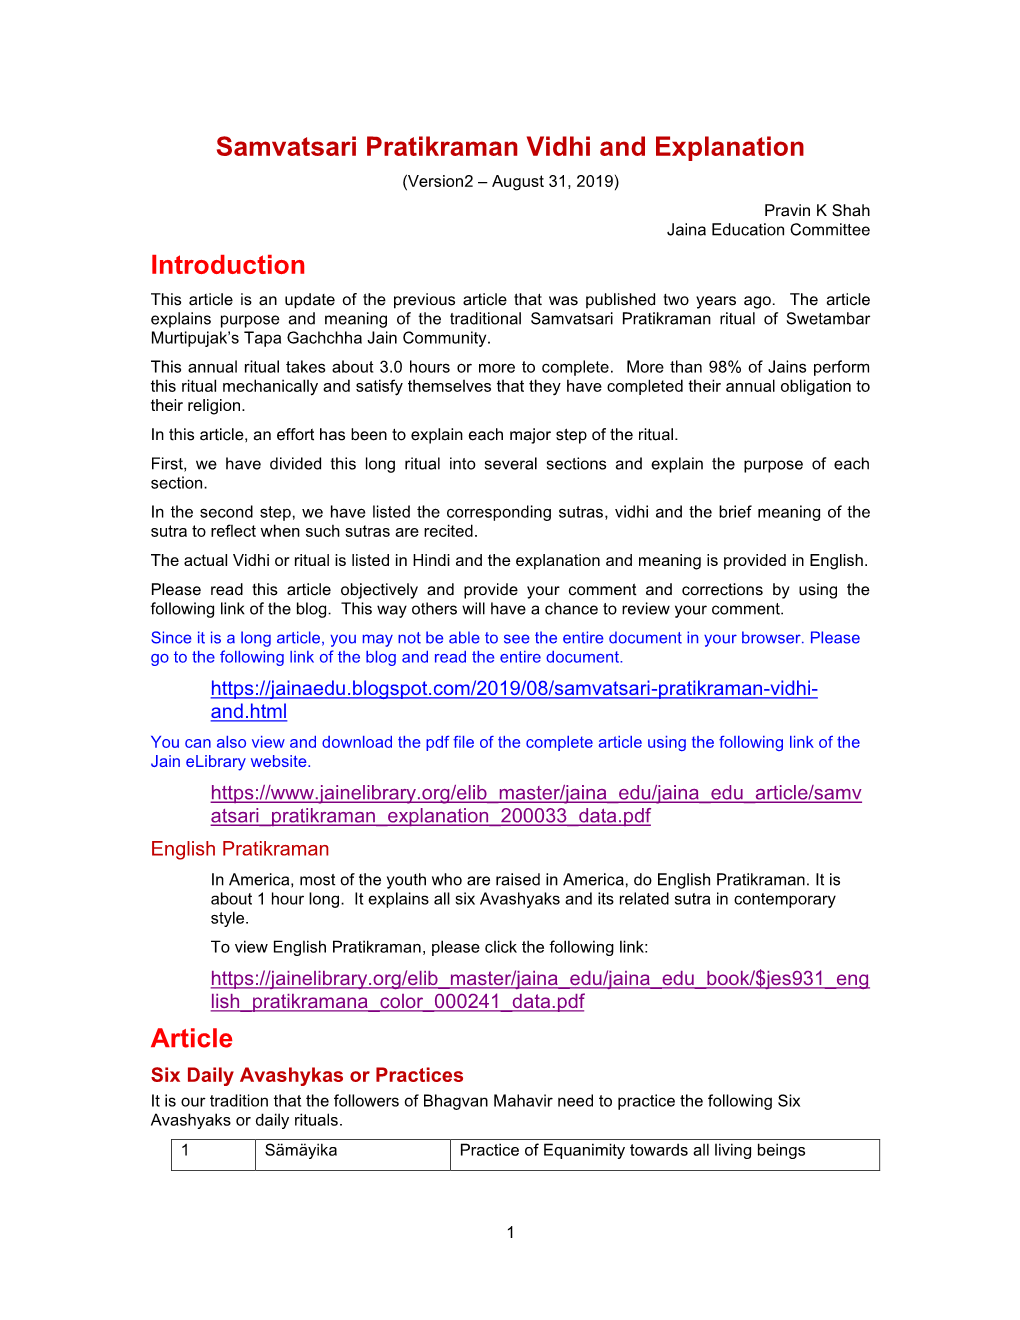 Samvatsari Pratikraman Vidhi and Explanation Introduction Article